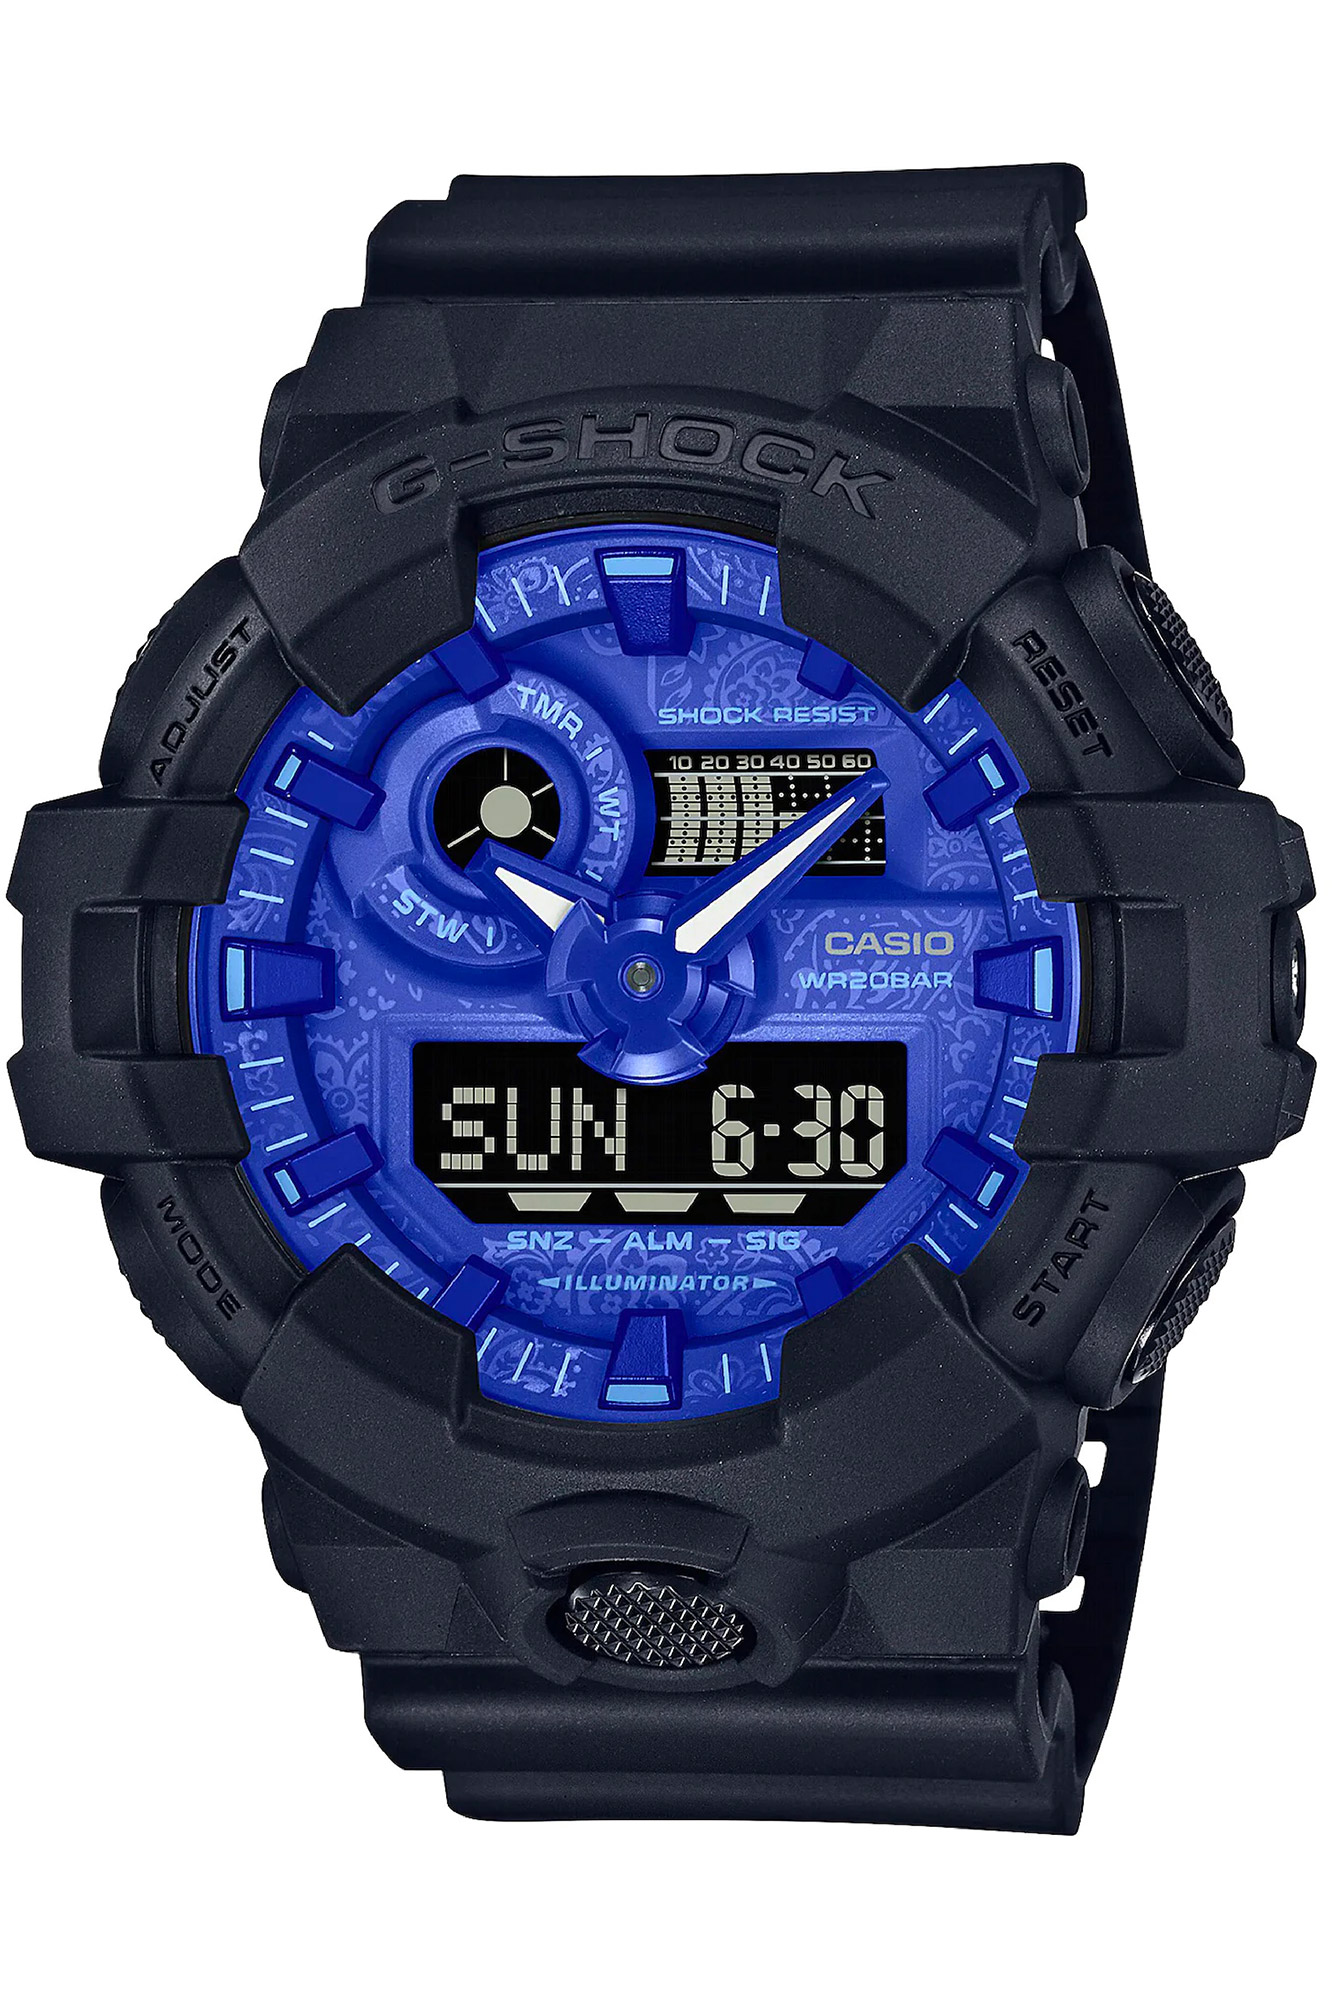 Reloj CASIO G-Shock ga-700bp-1aer